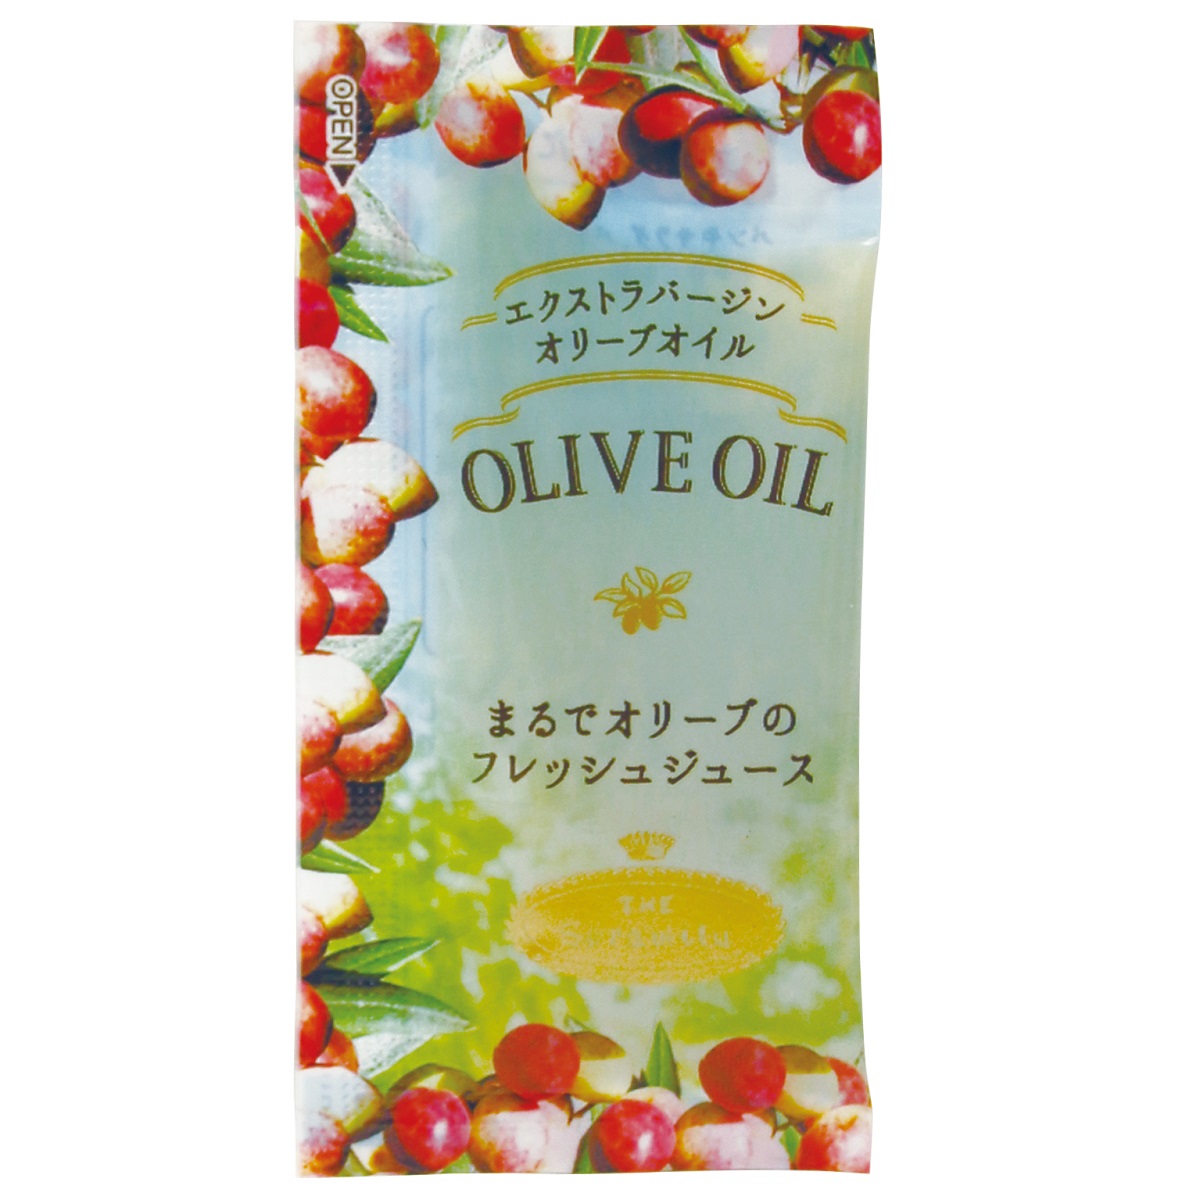 Extra Virgin Olive Oil Potion Pack 4g